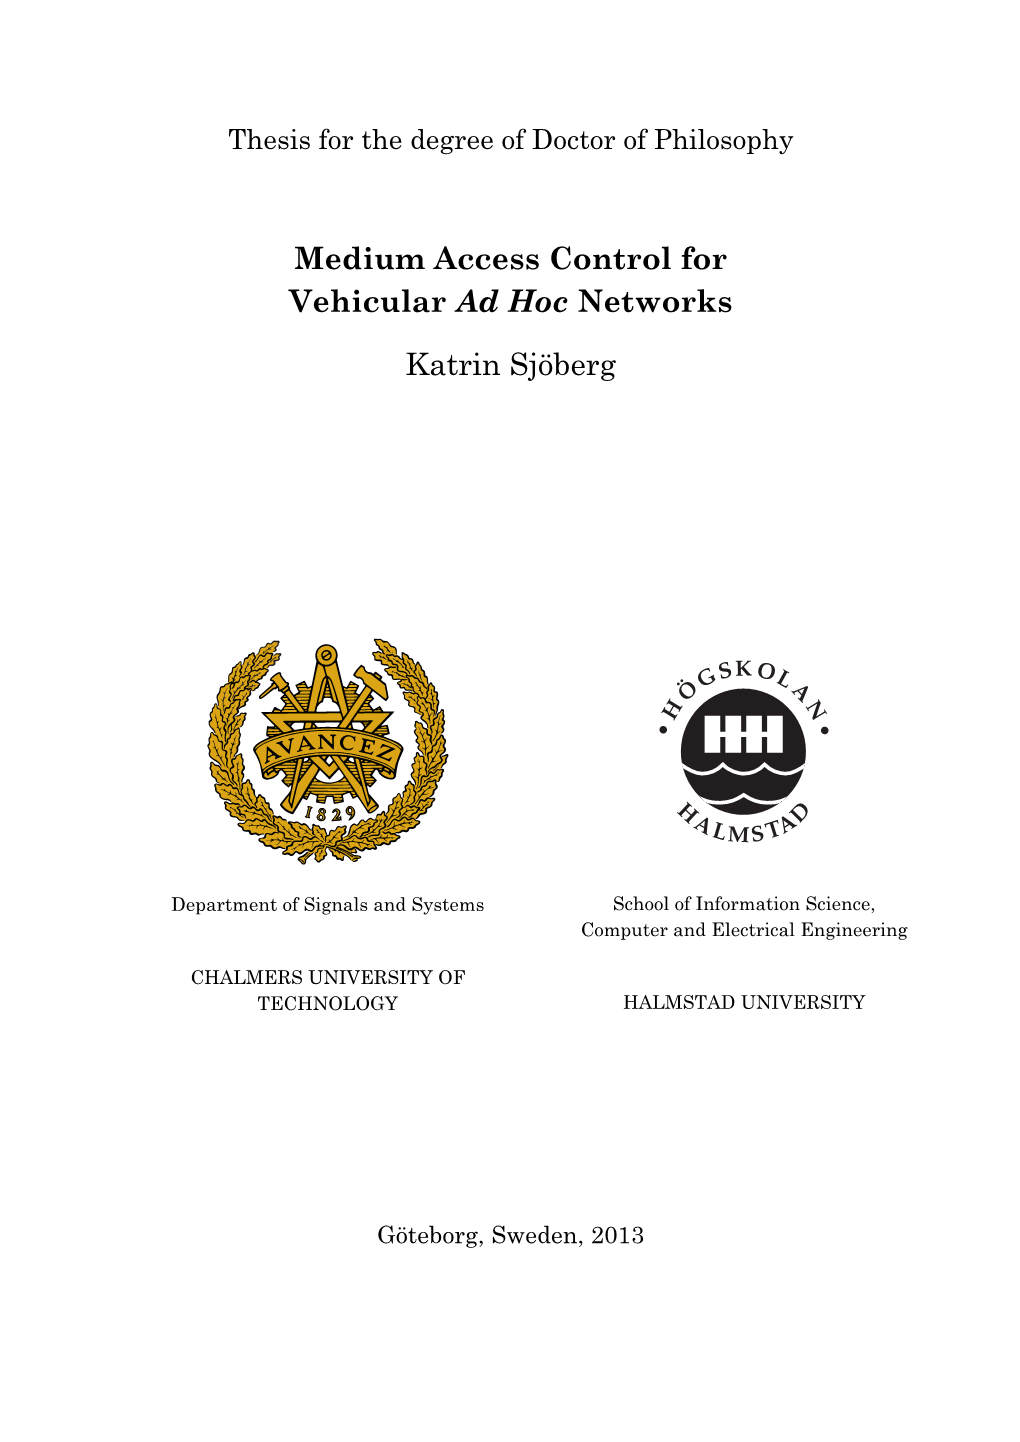 Medium Access Control for Vehicular Ad Hoc Networks KATRIN SJÖBERG ISBN 978-91-7385-832-8